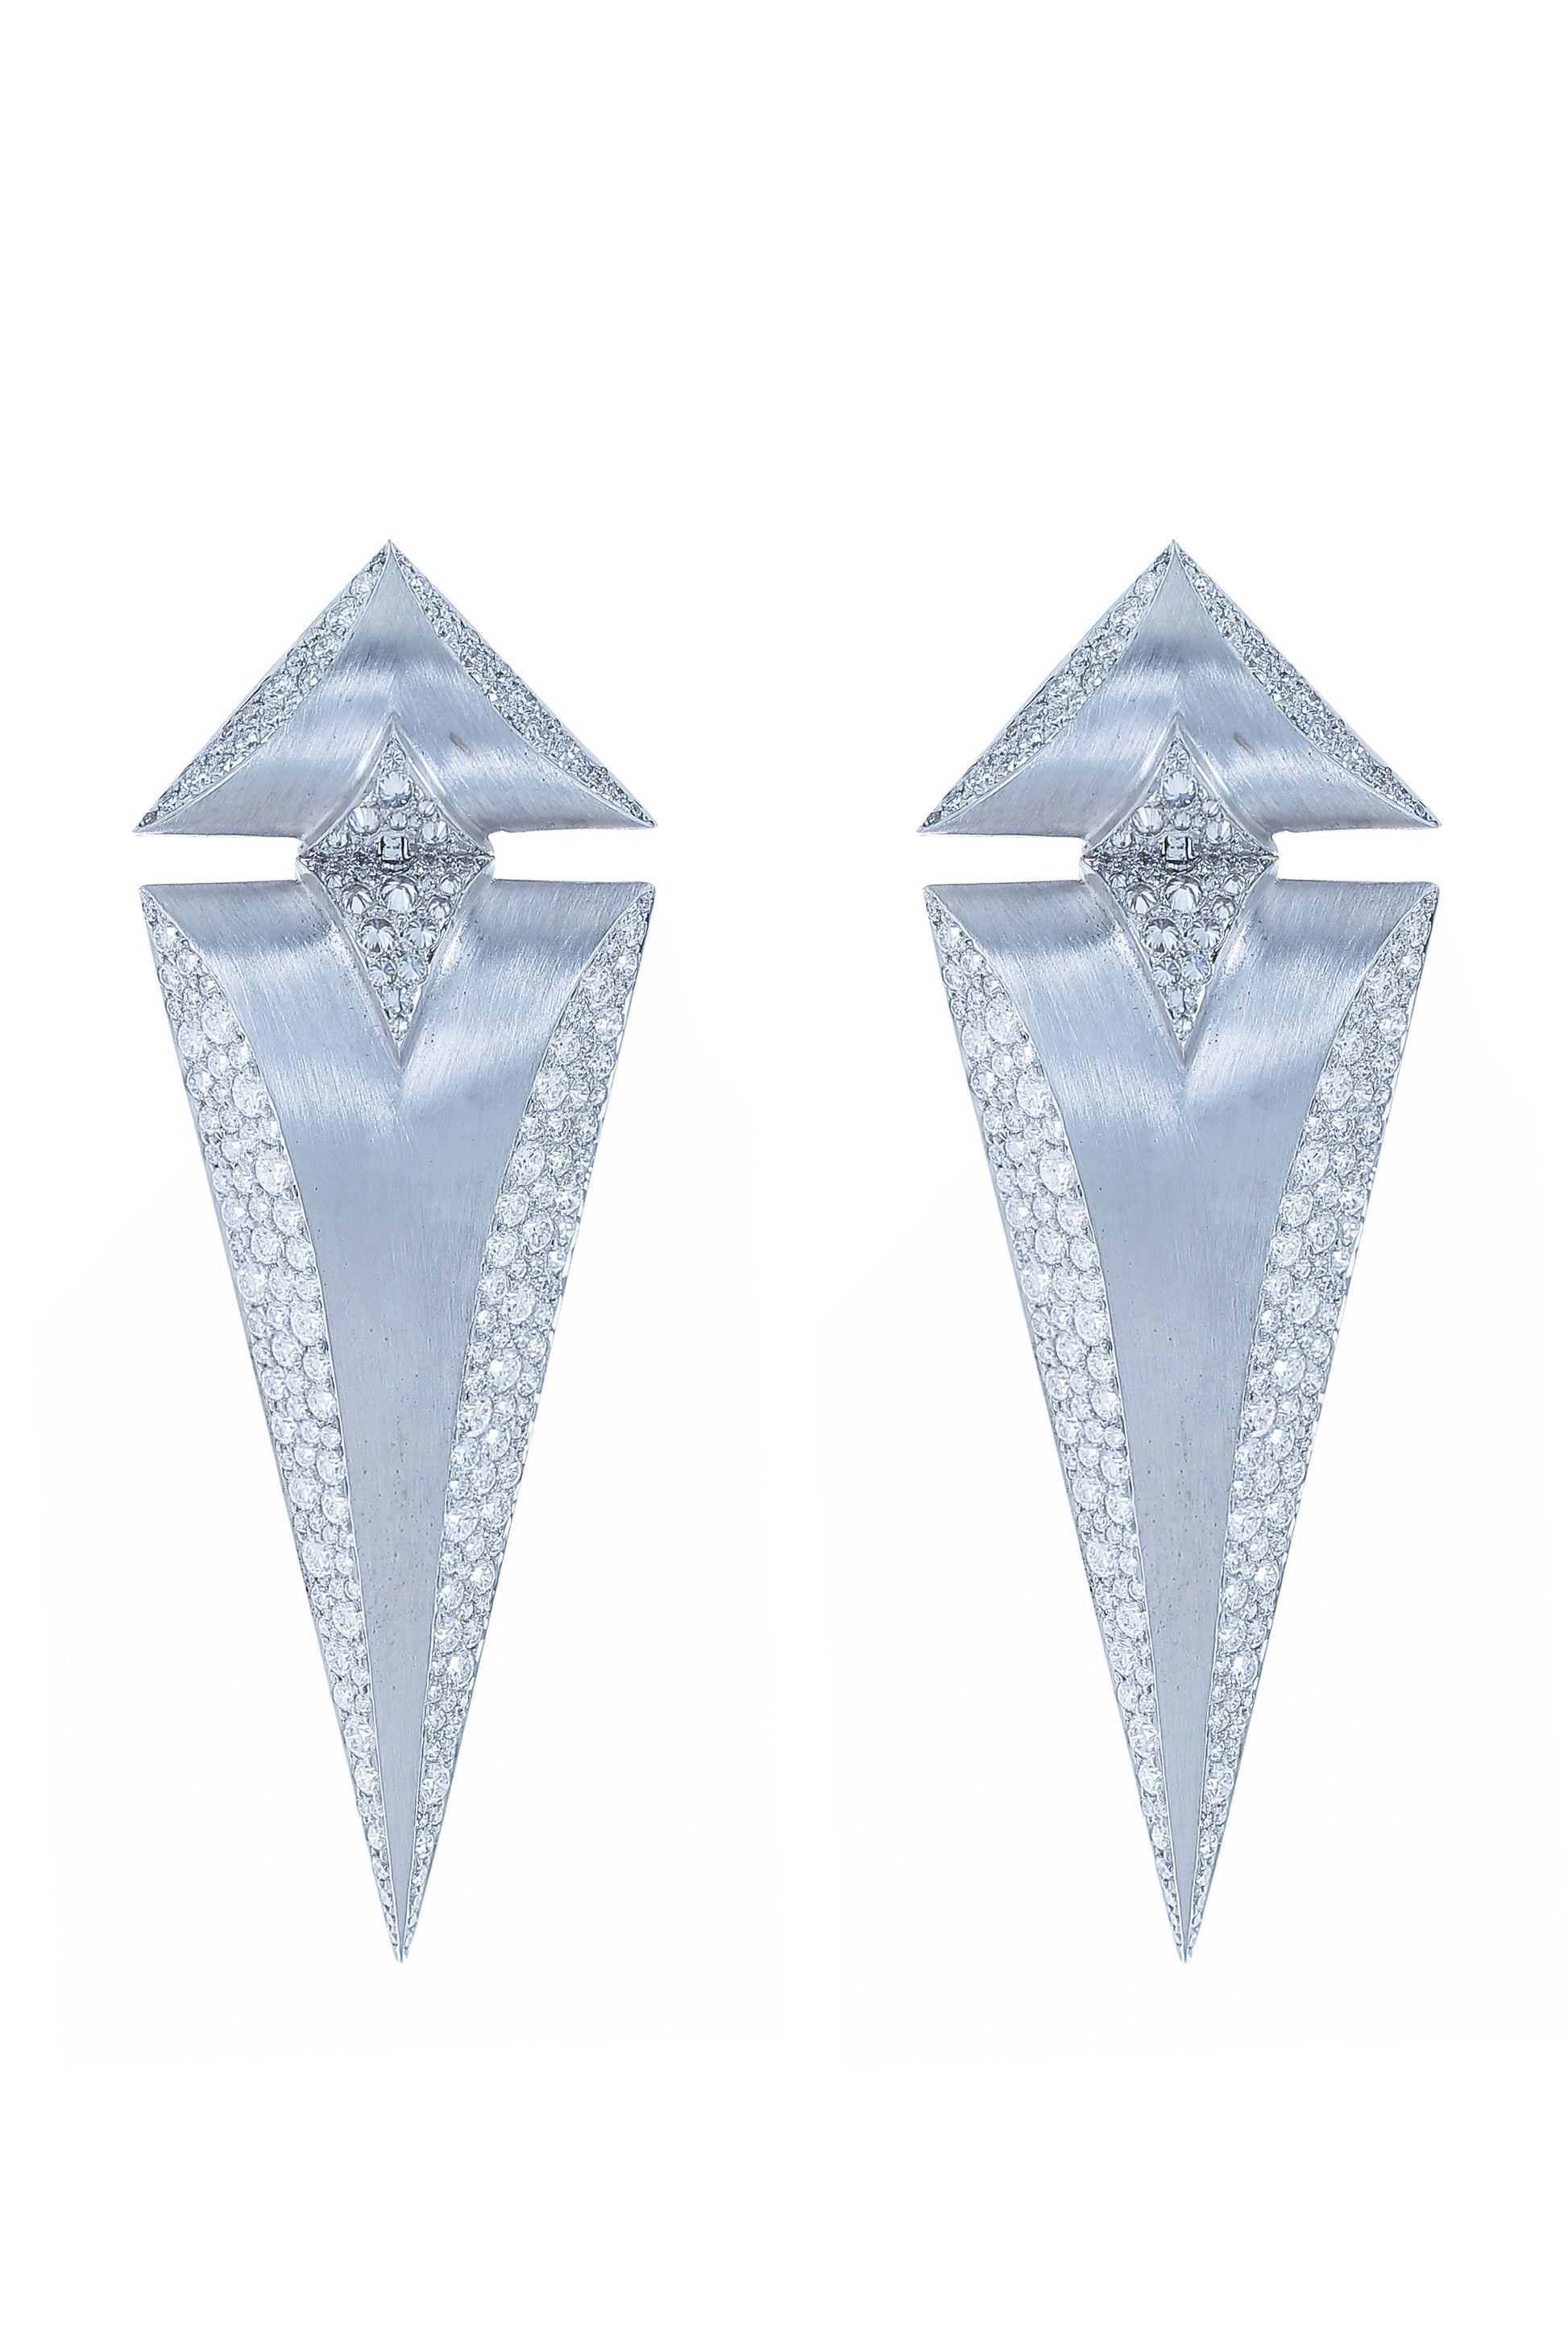 ARUNASHI-Diamond Triangle Earrings-WHITE GOLD